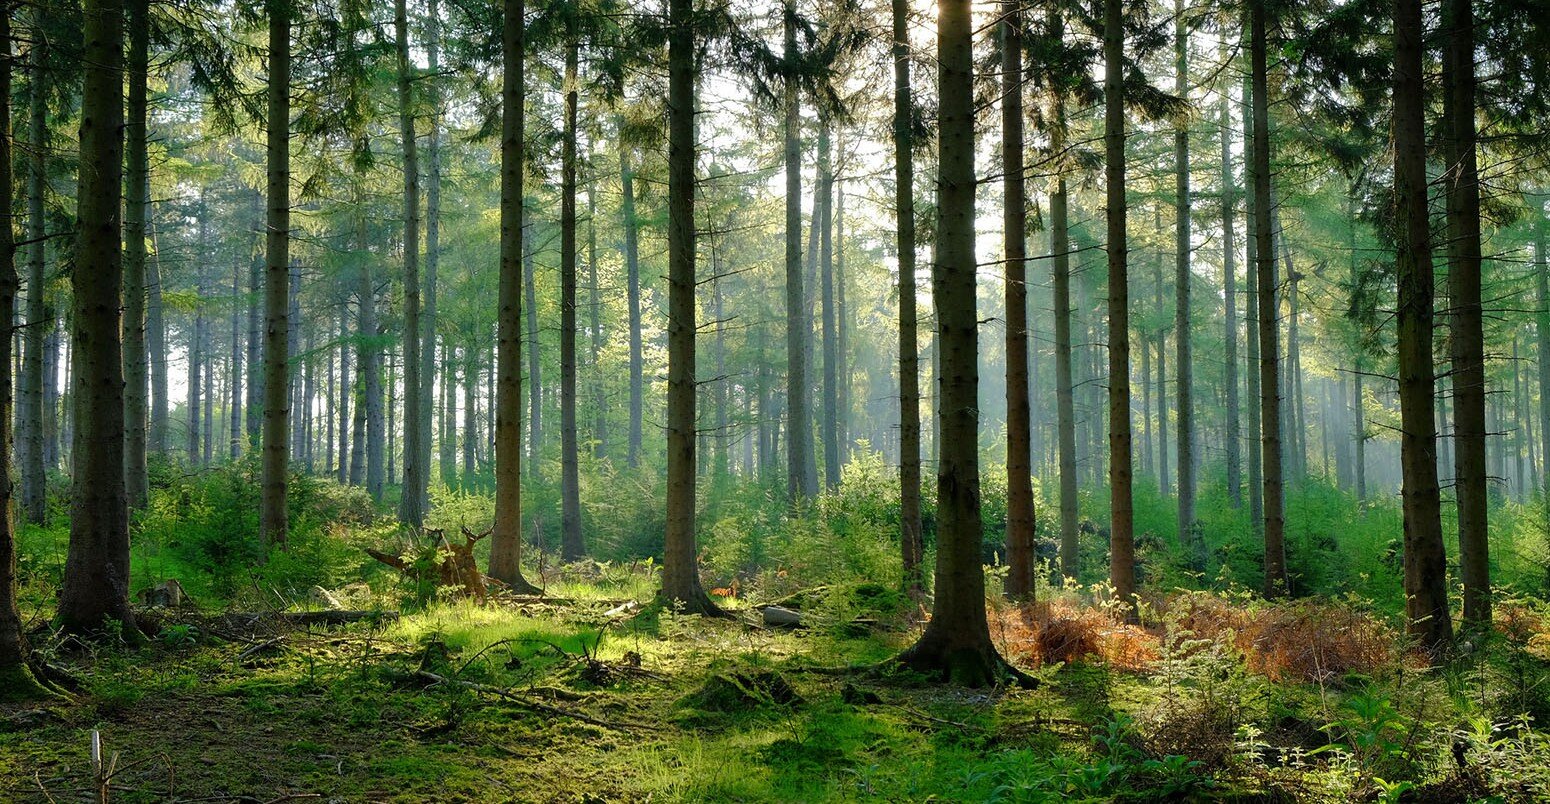 More information about "Νέα μελέτη: Τα τροπικά δάση μπορεί να απελευθερώνουν άνθρακα"